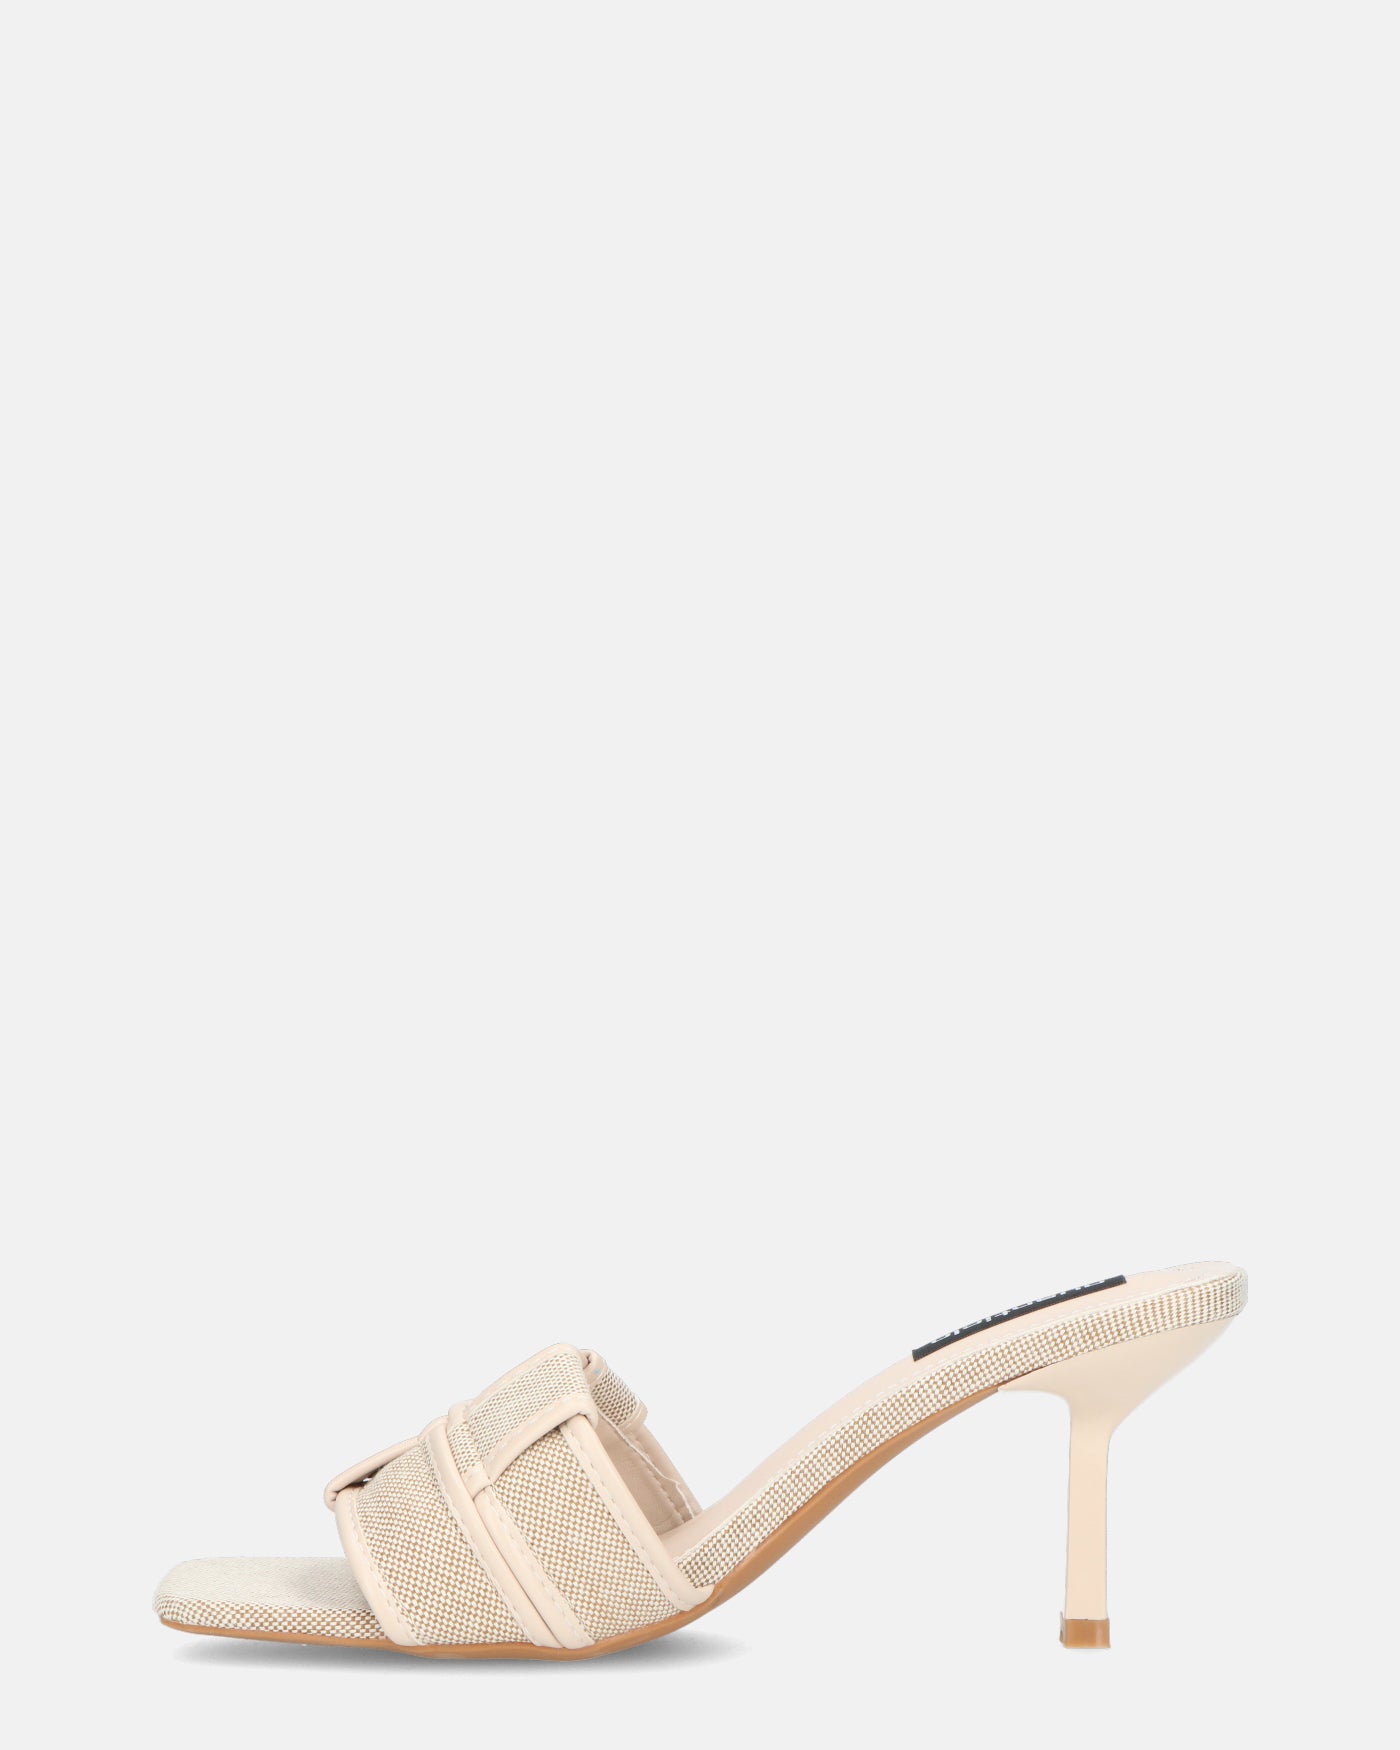 SABINA - beige fabric sandals with heels